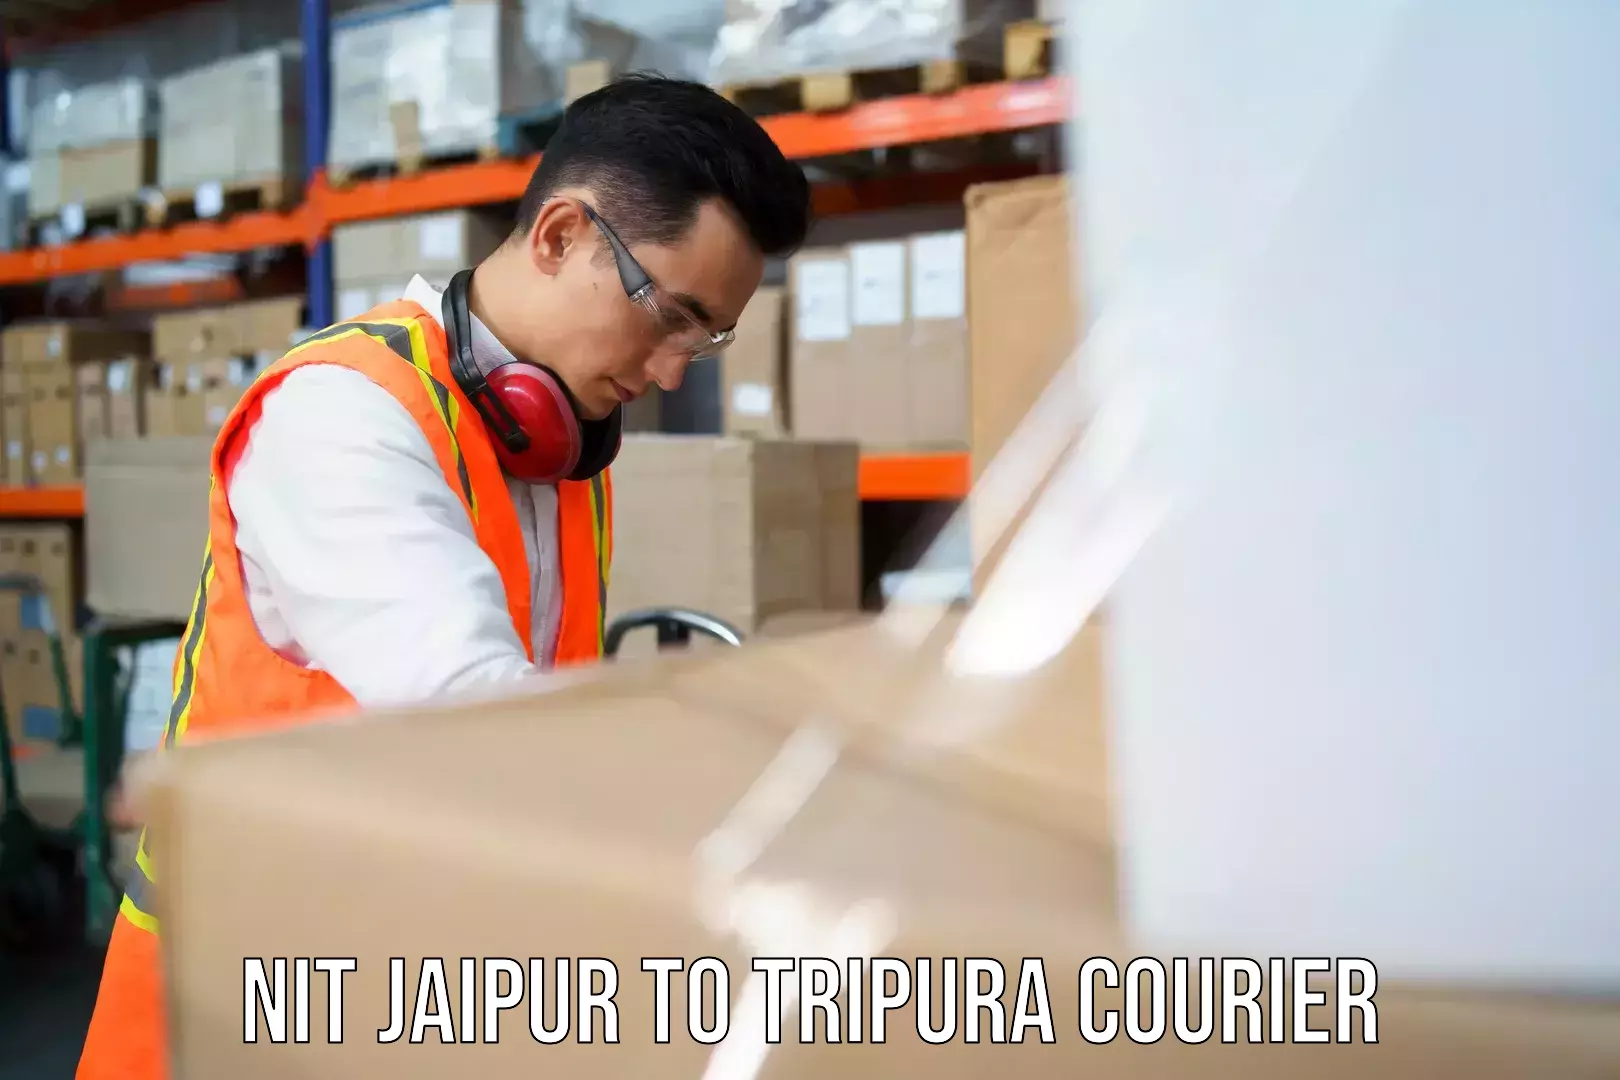 High-capacity parcel service NIT Jaipur to Manughat